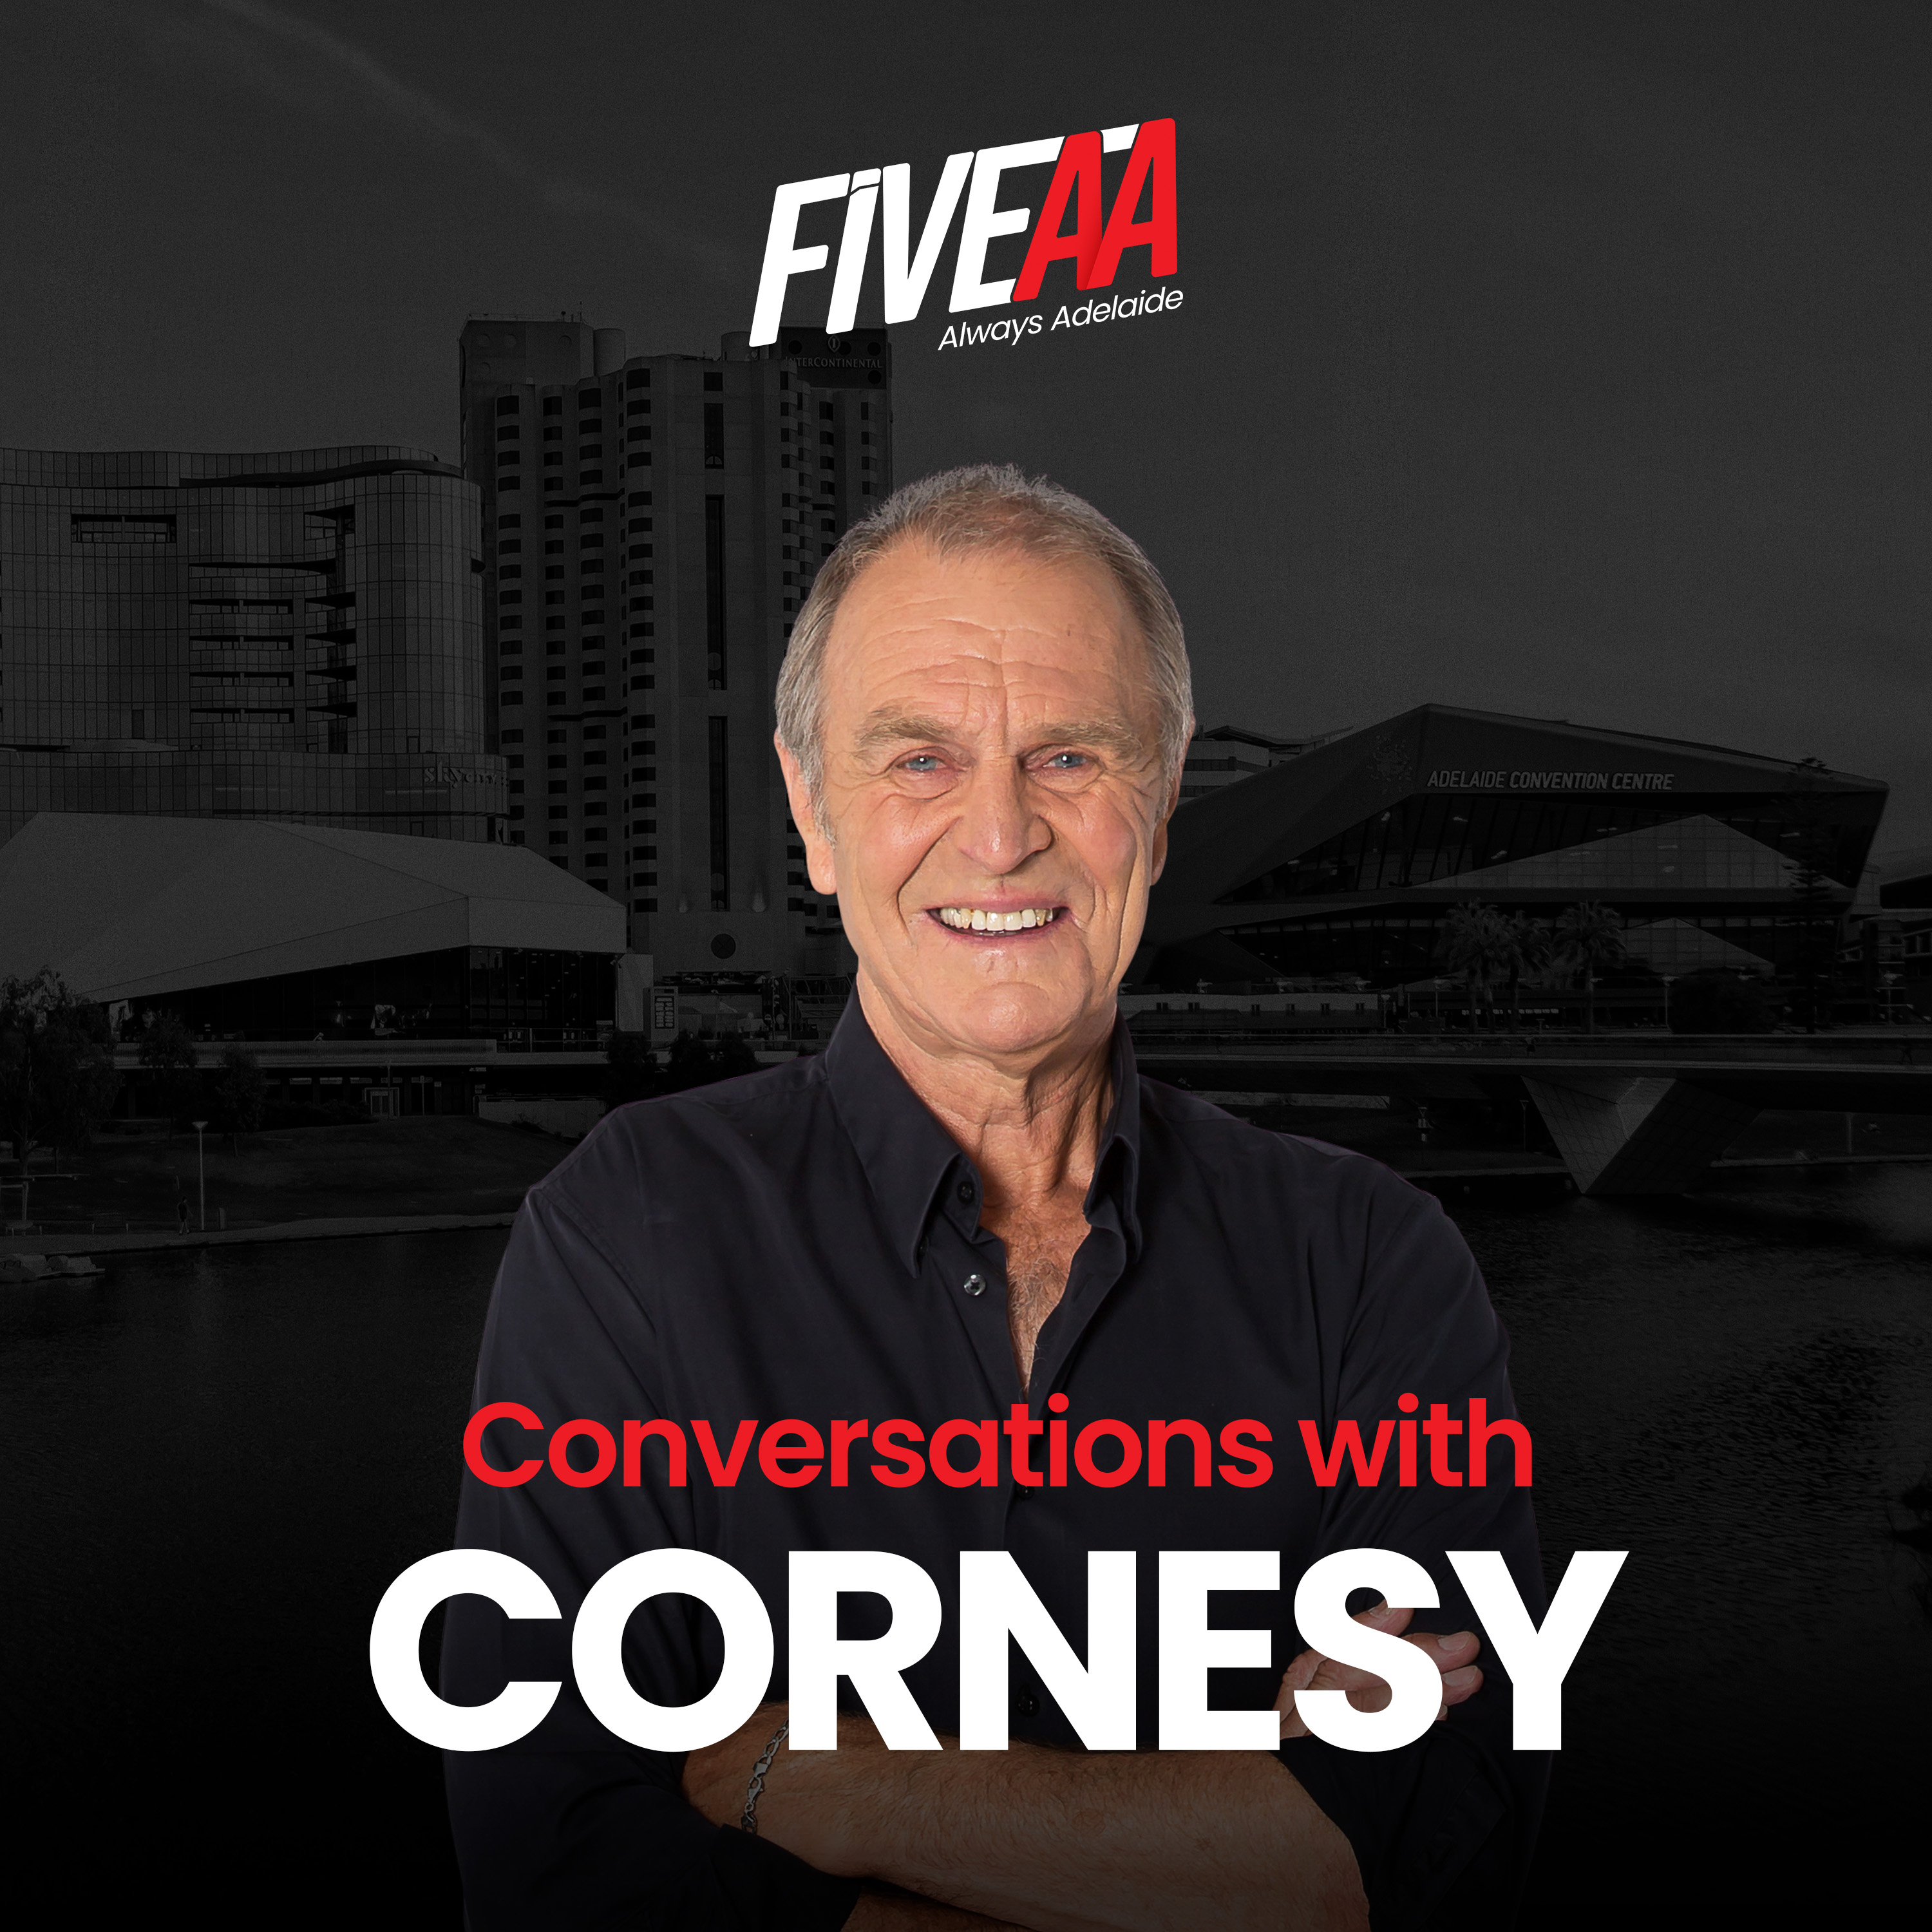 Conversations with Cornesy - Denis Waitley